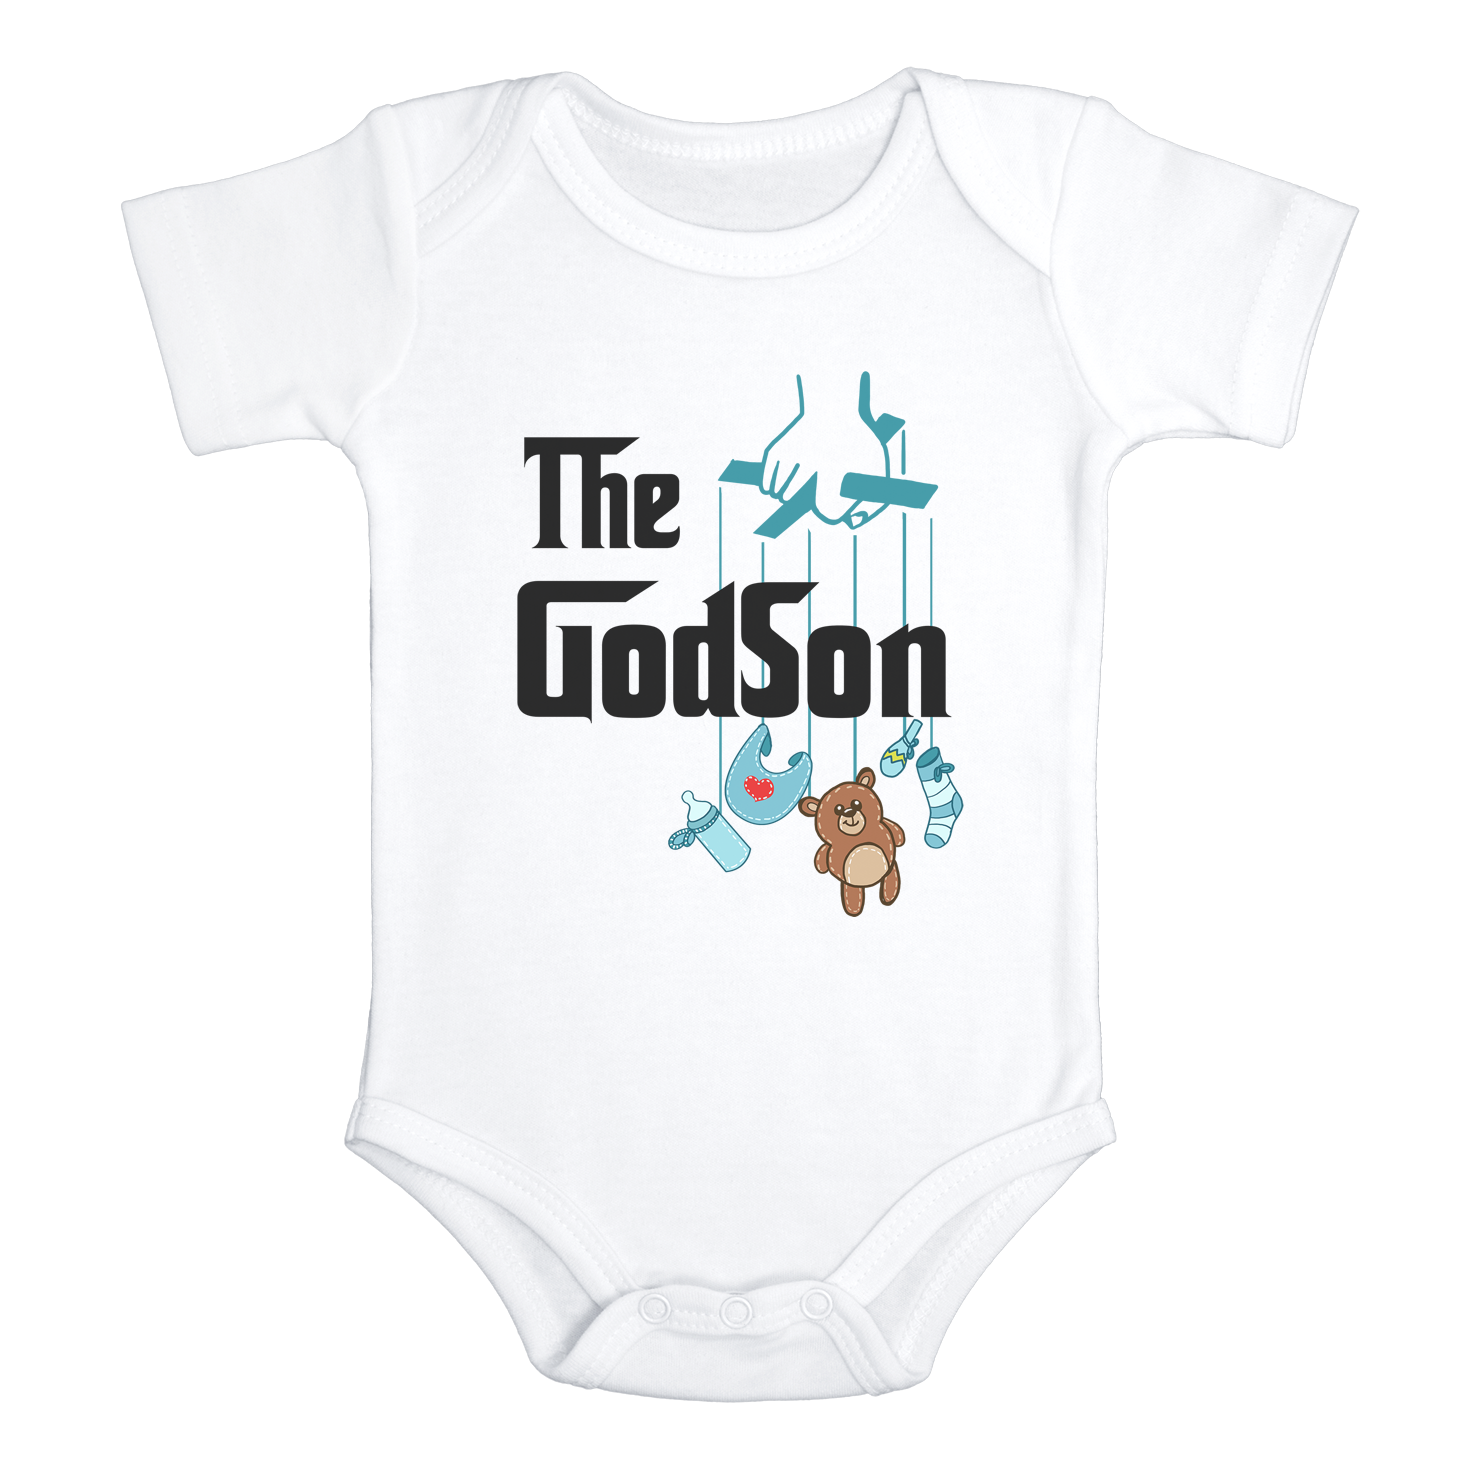 THE GODSON Funny baby onesies the godfather bodysuit (white: short or long sleeve) - HappyAddition